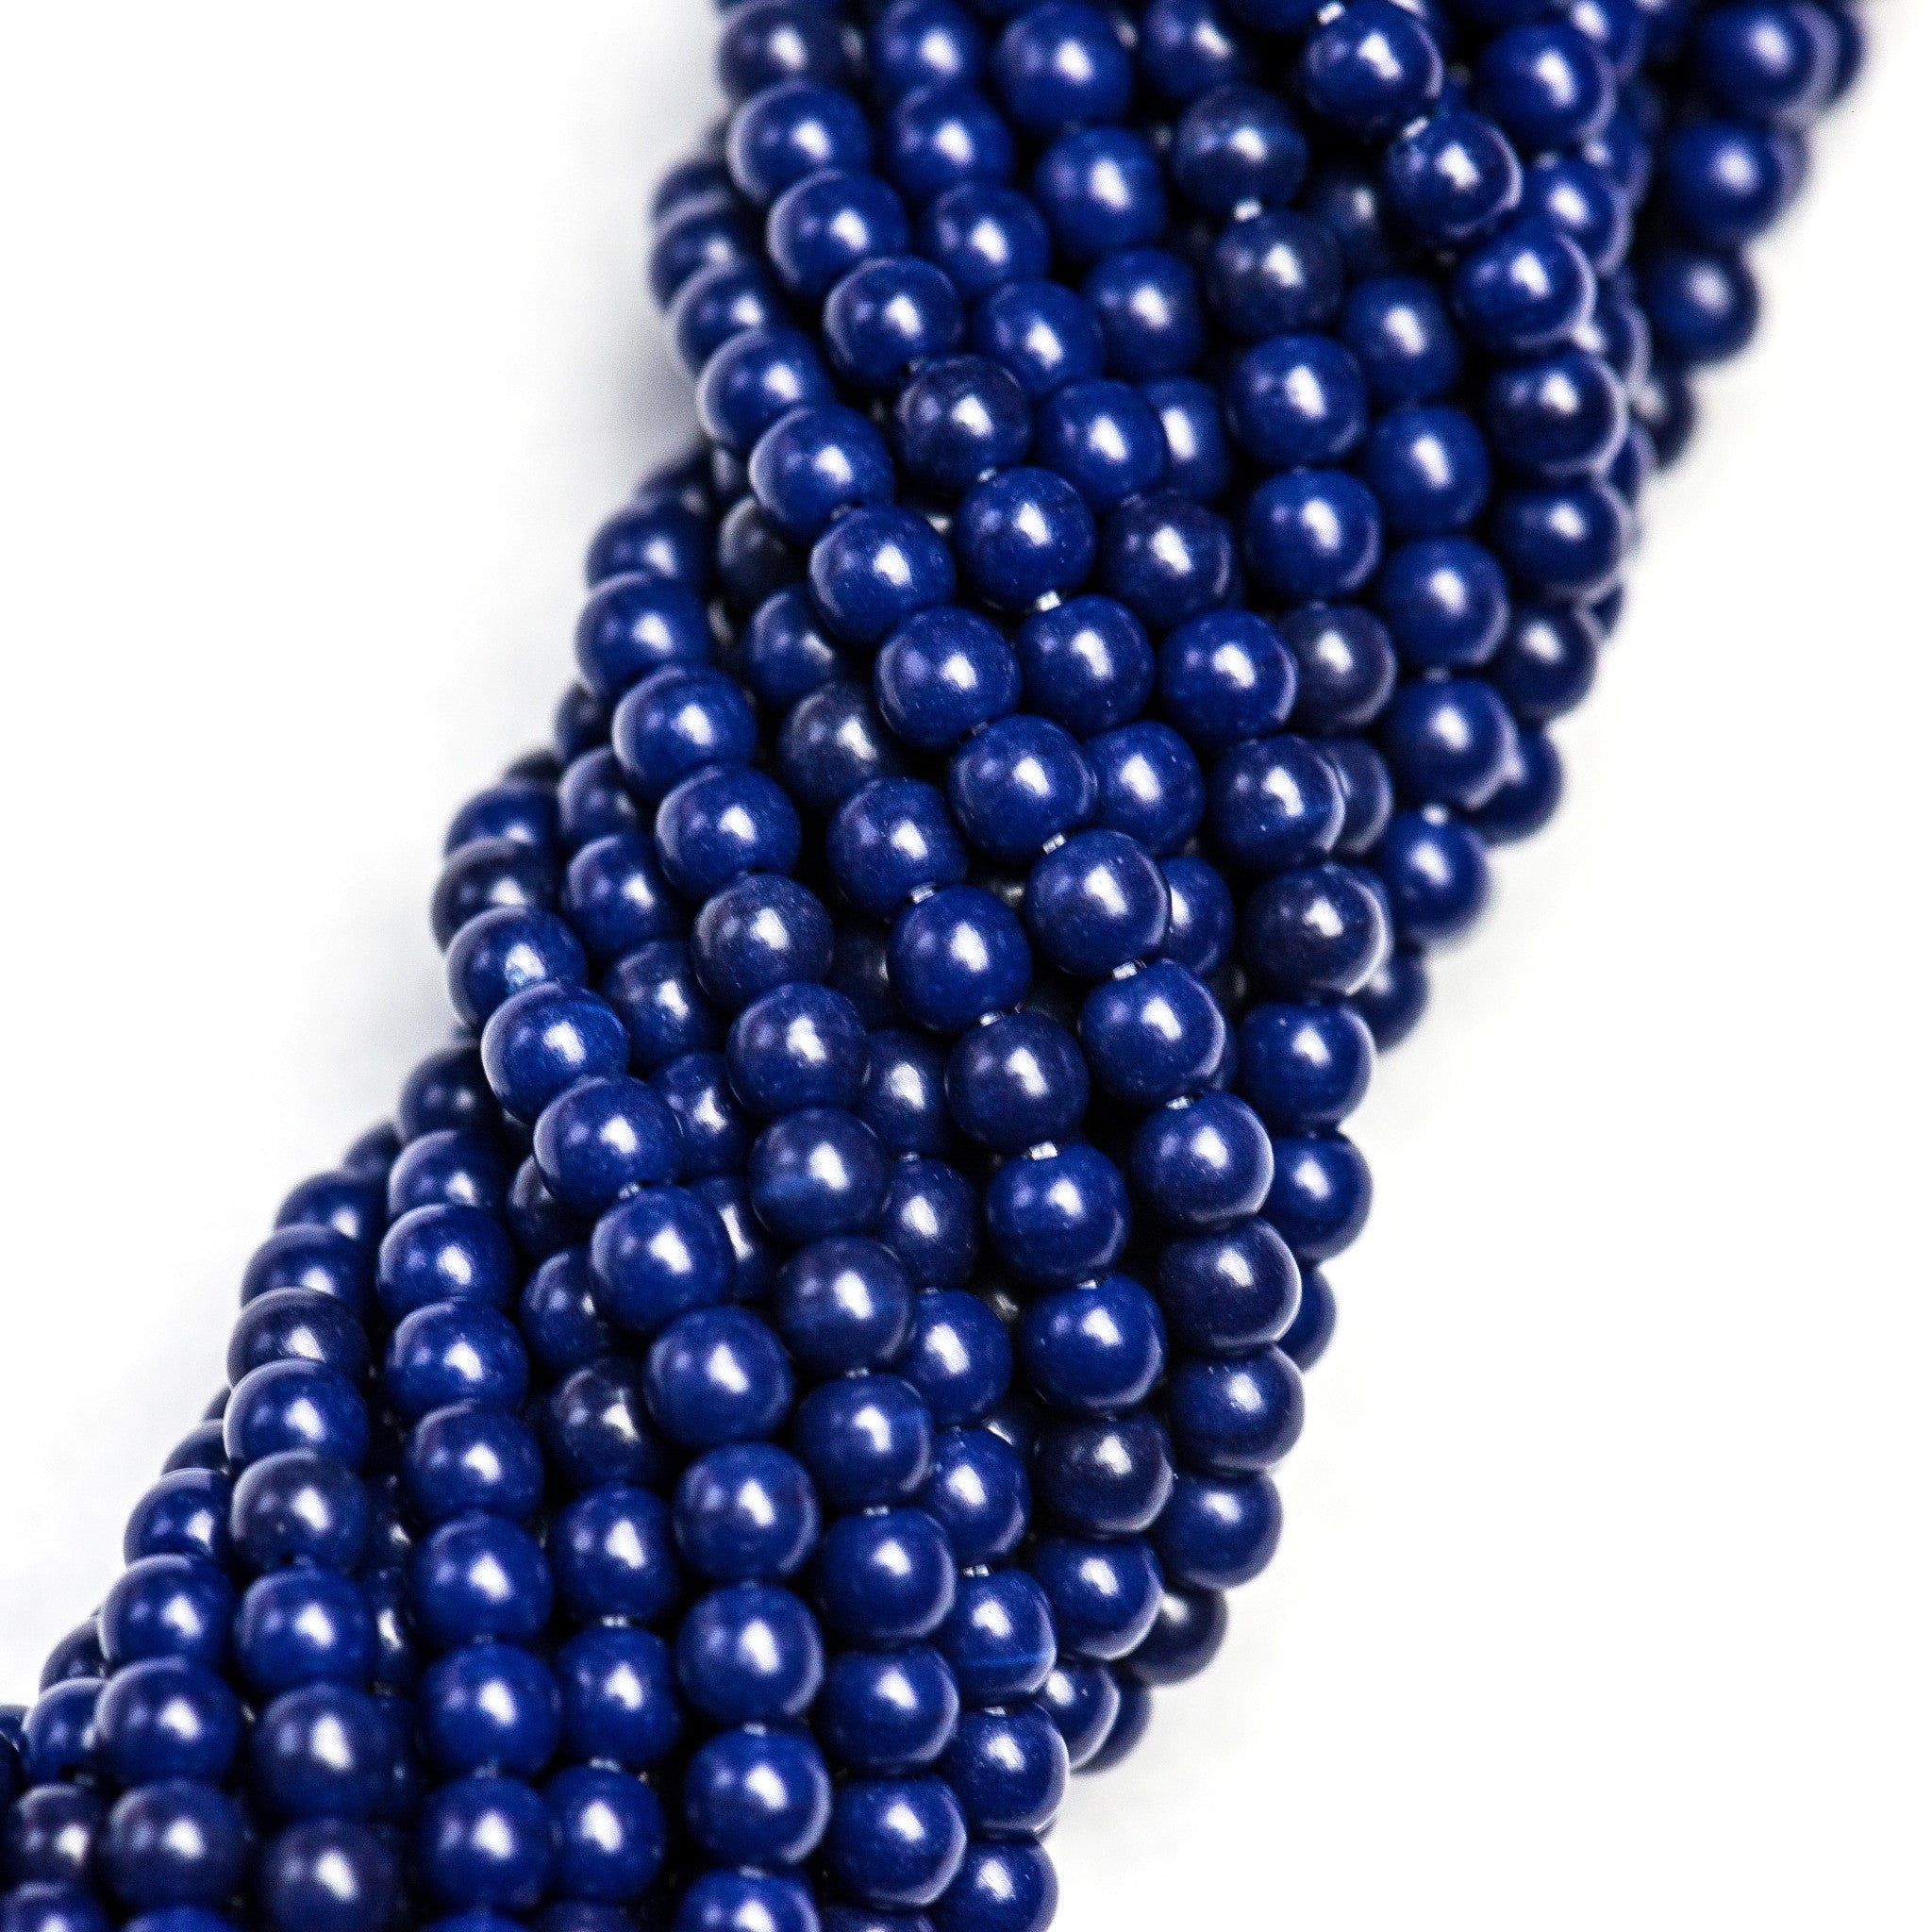 Glow-in-the-Dark Glass Round Beads - 6mm Light Blue #9 15 inch strand